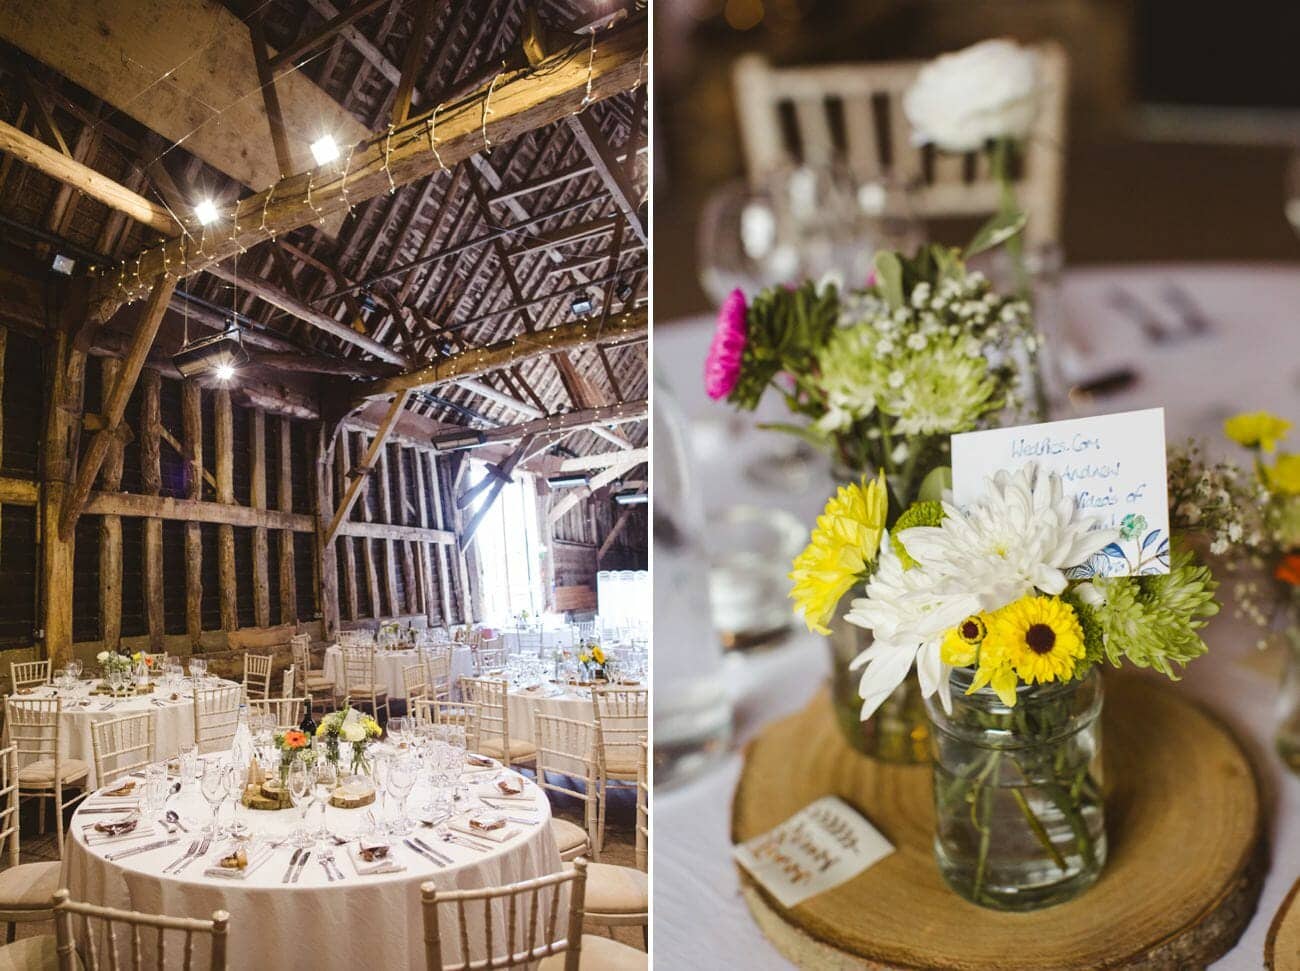 Blackthorpe barn wedding photography details